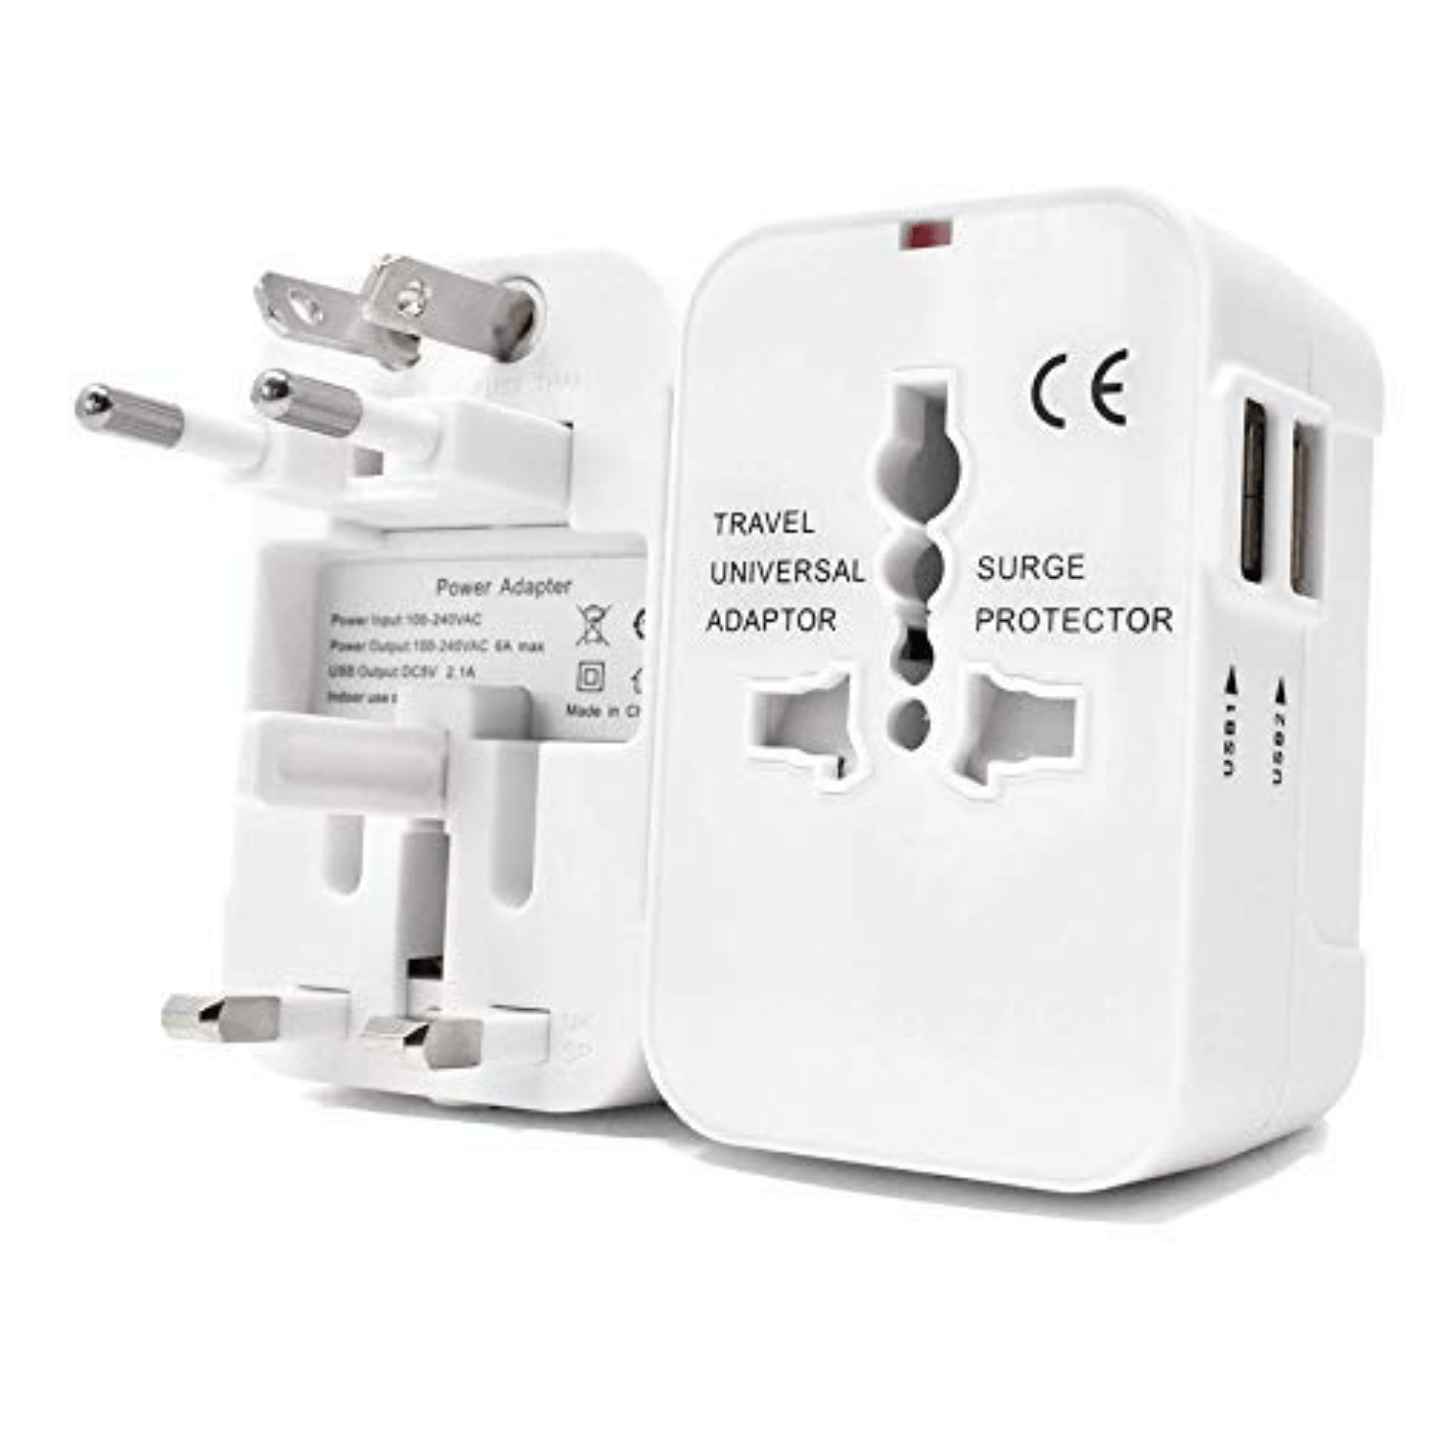 Latest Universal International Travel Adapter 2 Port/USB Worldwide AC Outlet Plugs for Europe, UK, US, AU, Asia White,Universal Travel Adapter fit...